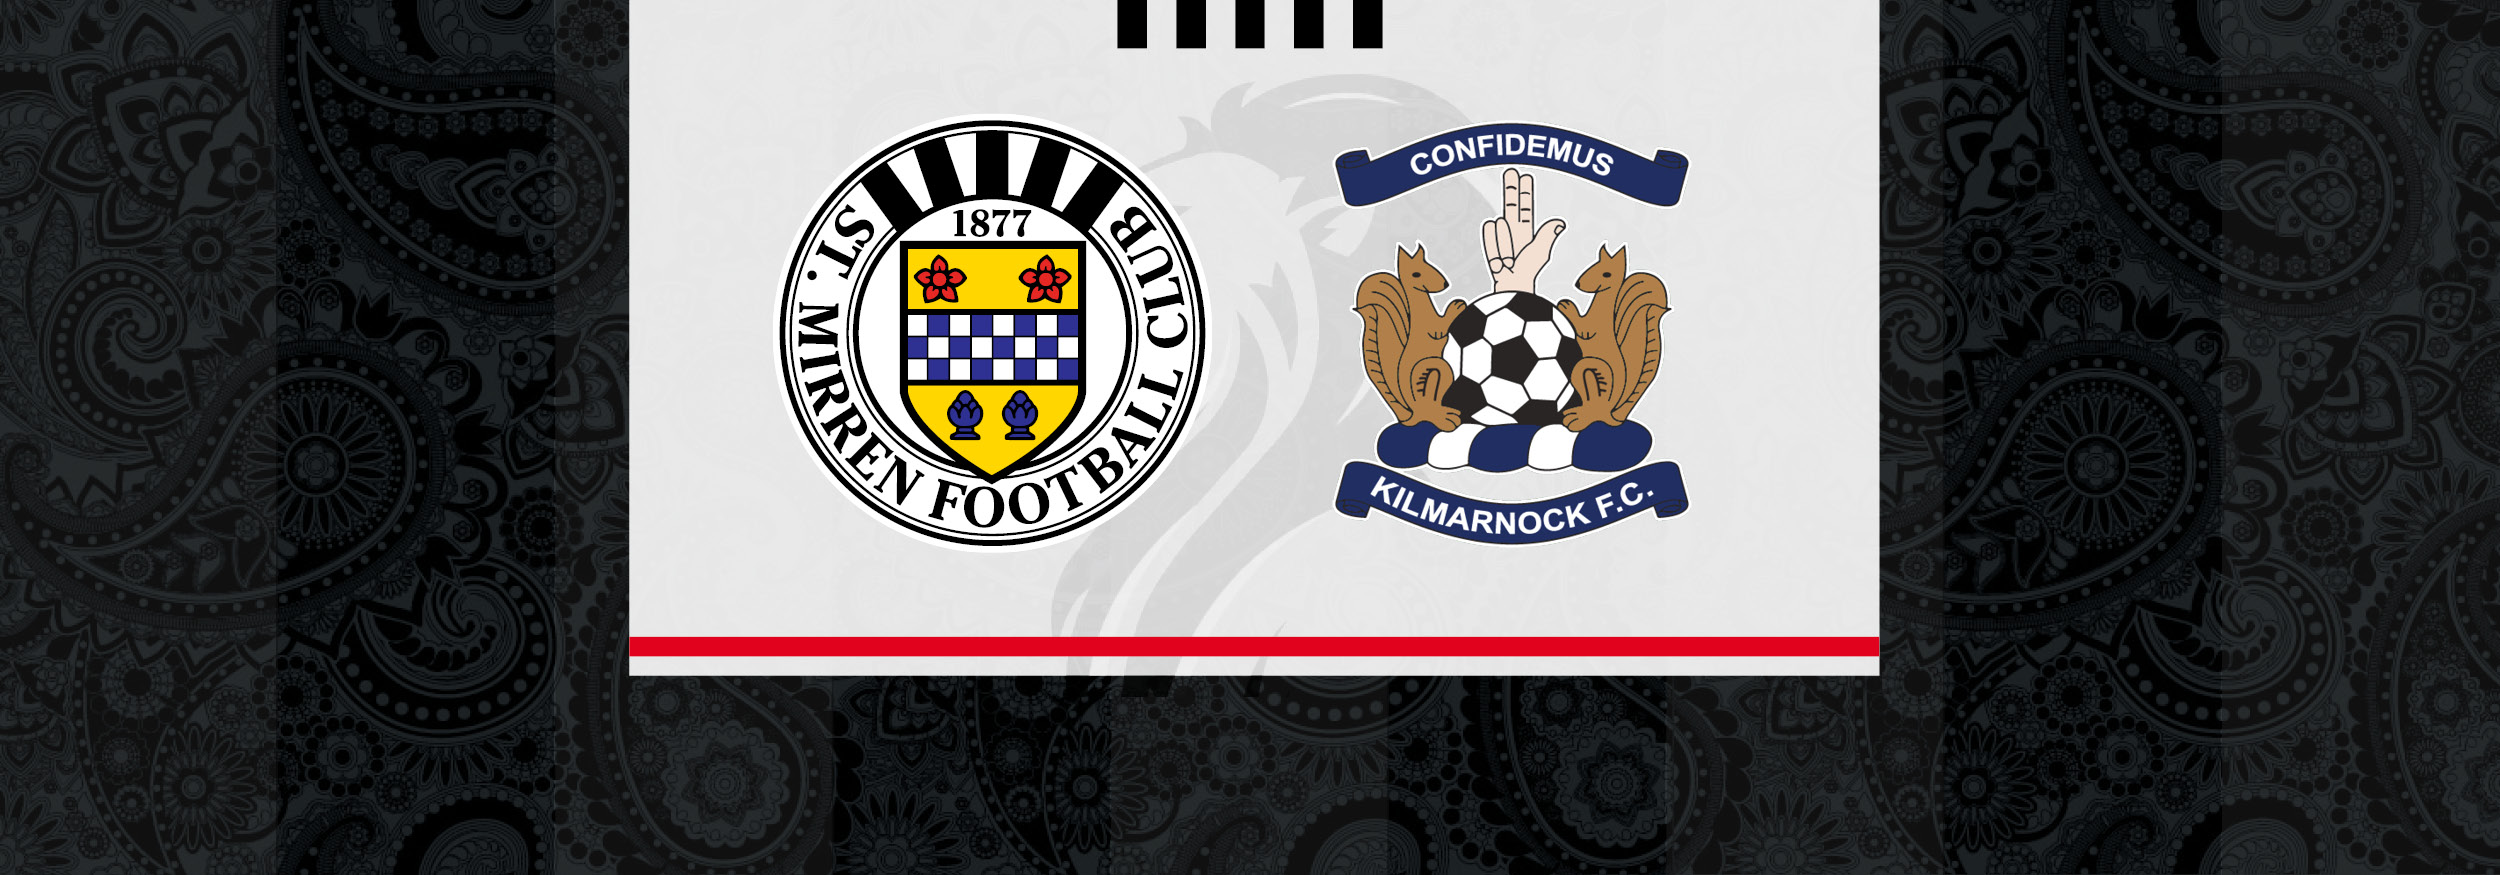 Matchday Info: St Mirren v Kilmarnock (15th Oct)